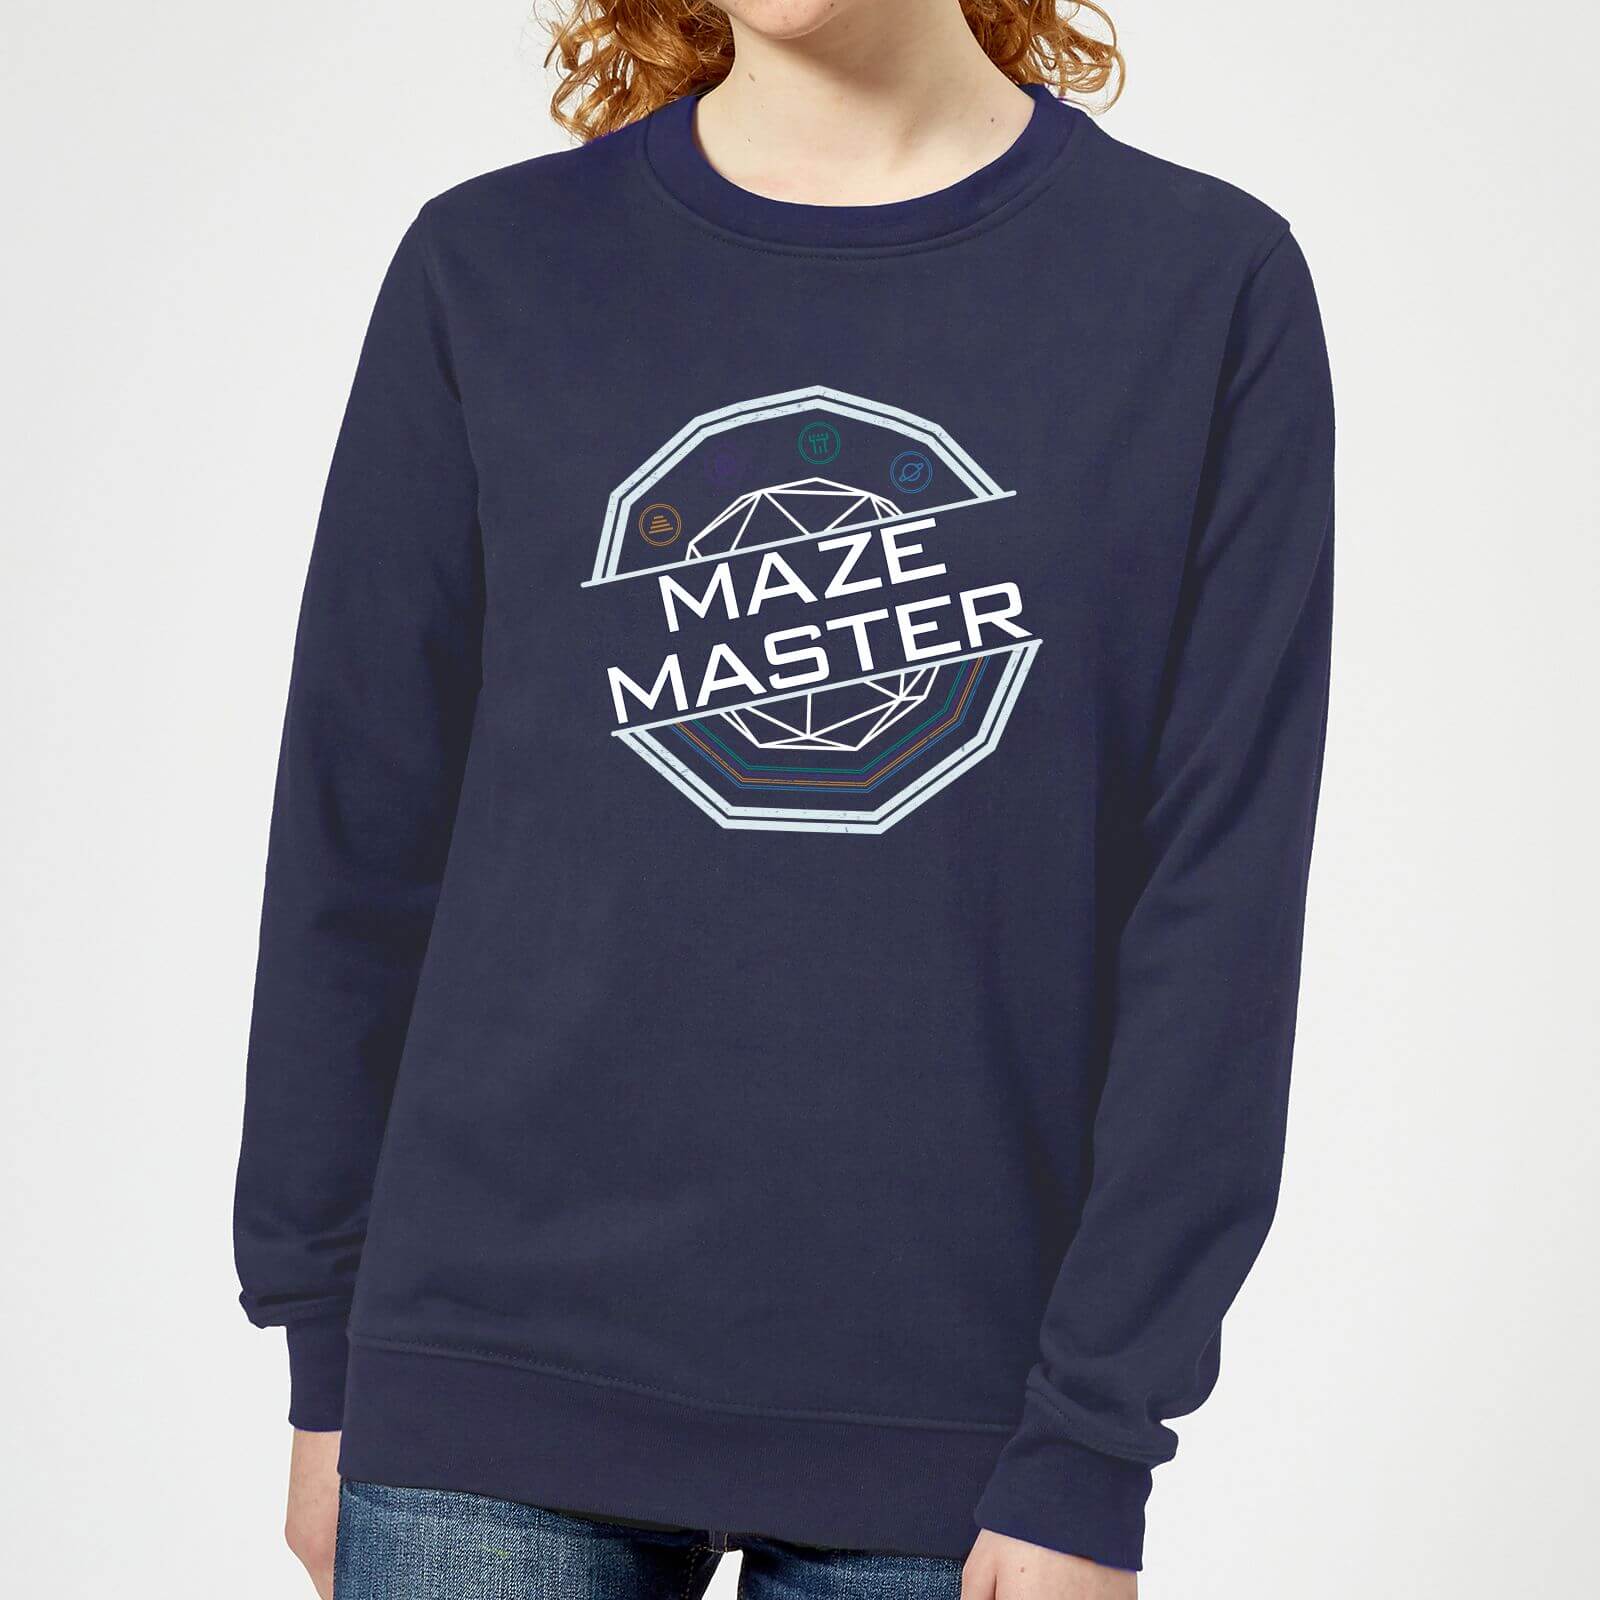 Crystal Maze Maze Master Women's Sweatshirt - Navy - XS - Navy